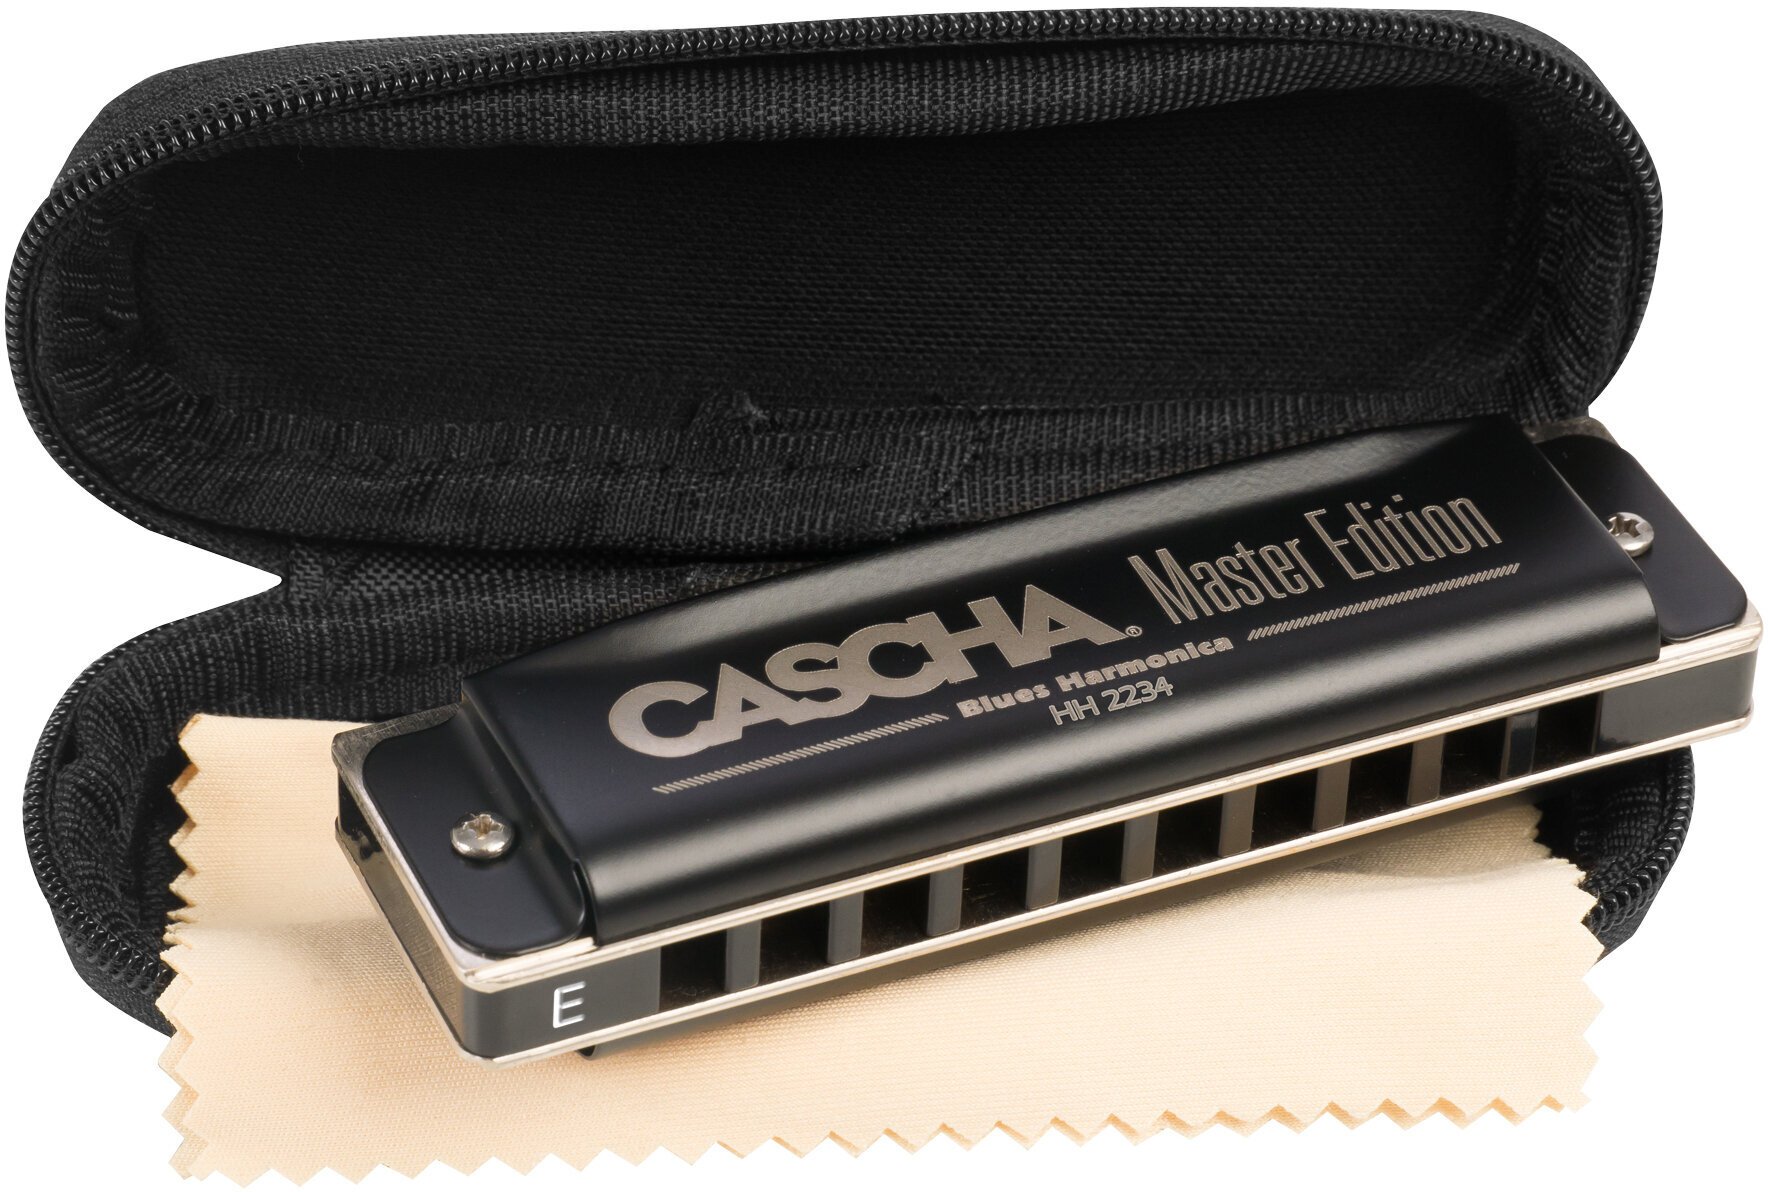 Diatonic harmonica Cascha HH 2234 Master Edition Blues E